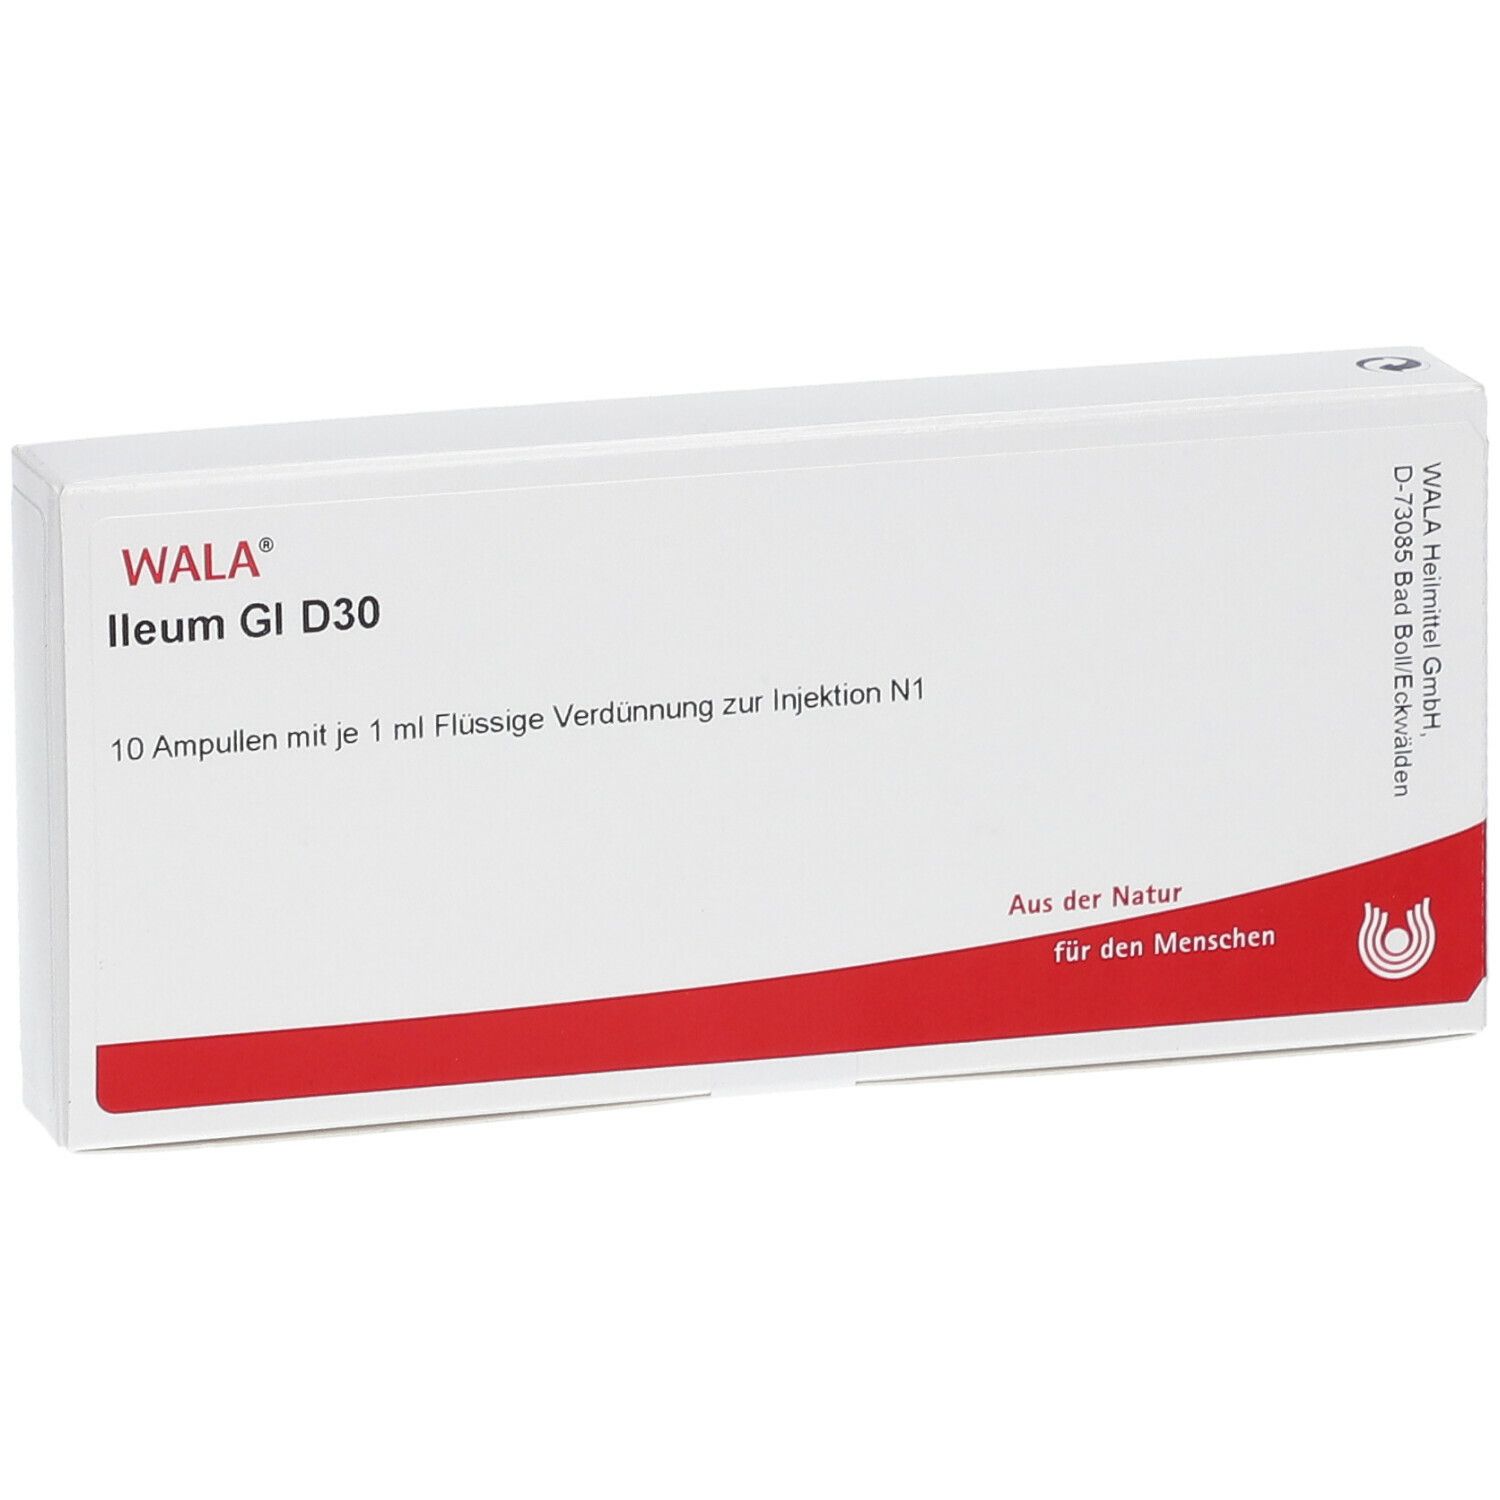 WALA® Ileum Gl D 30